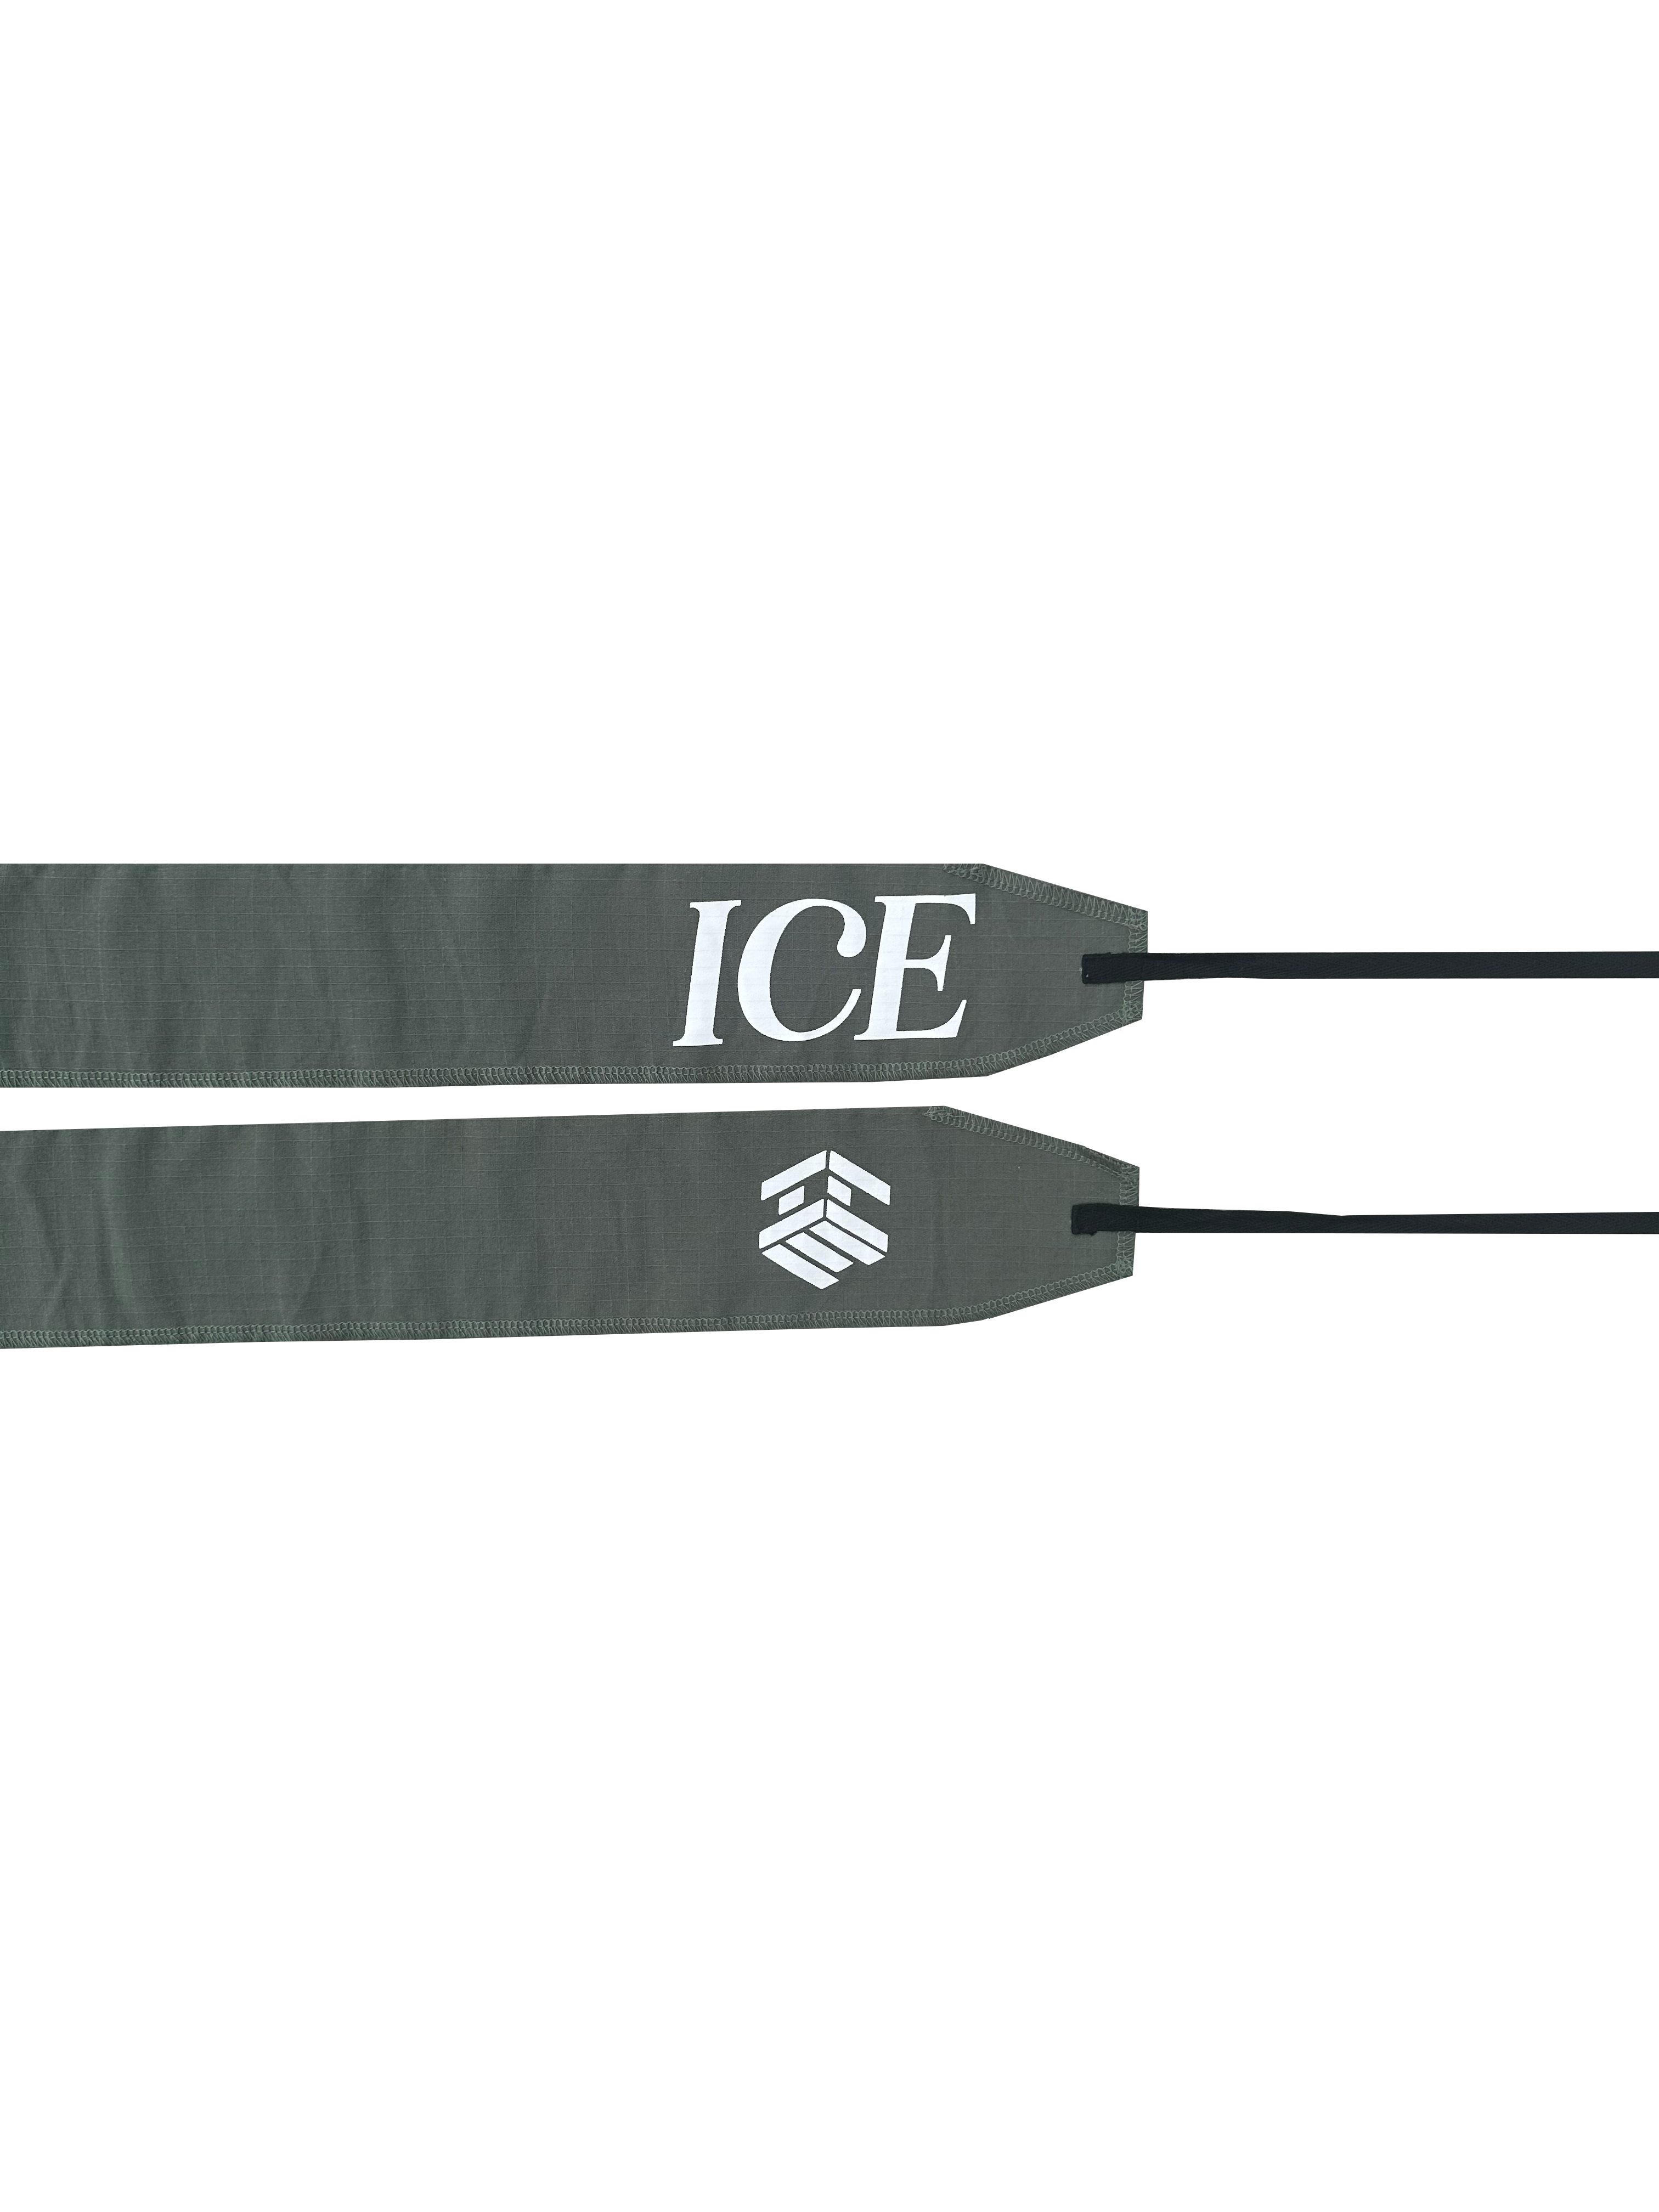 THE ICE WRIST WRAPS - SAGE GREEN